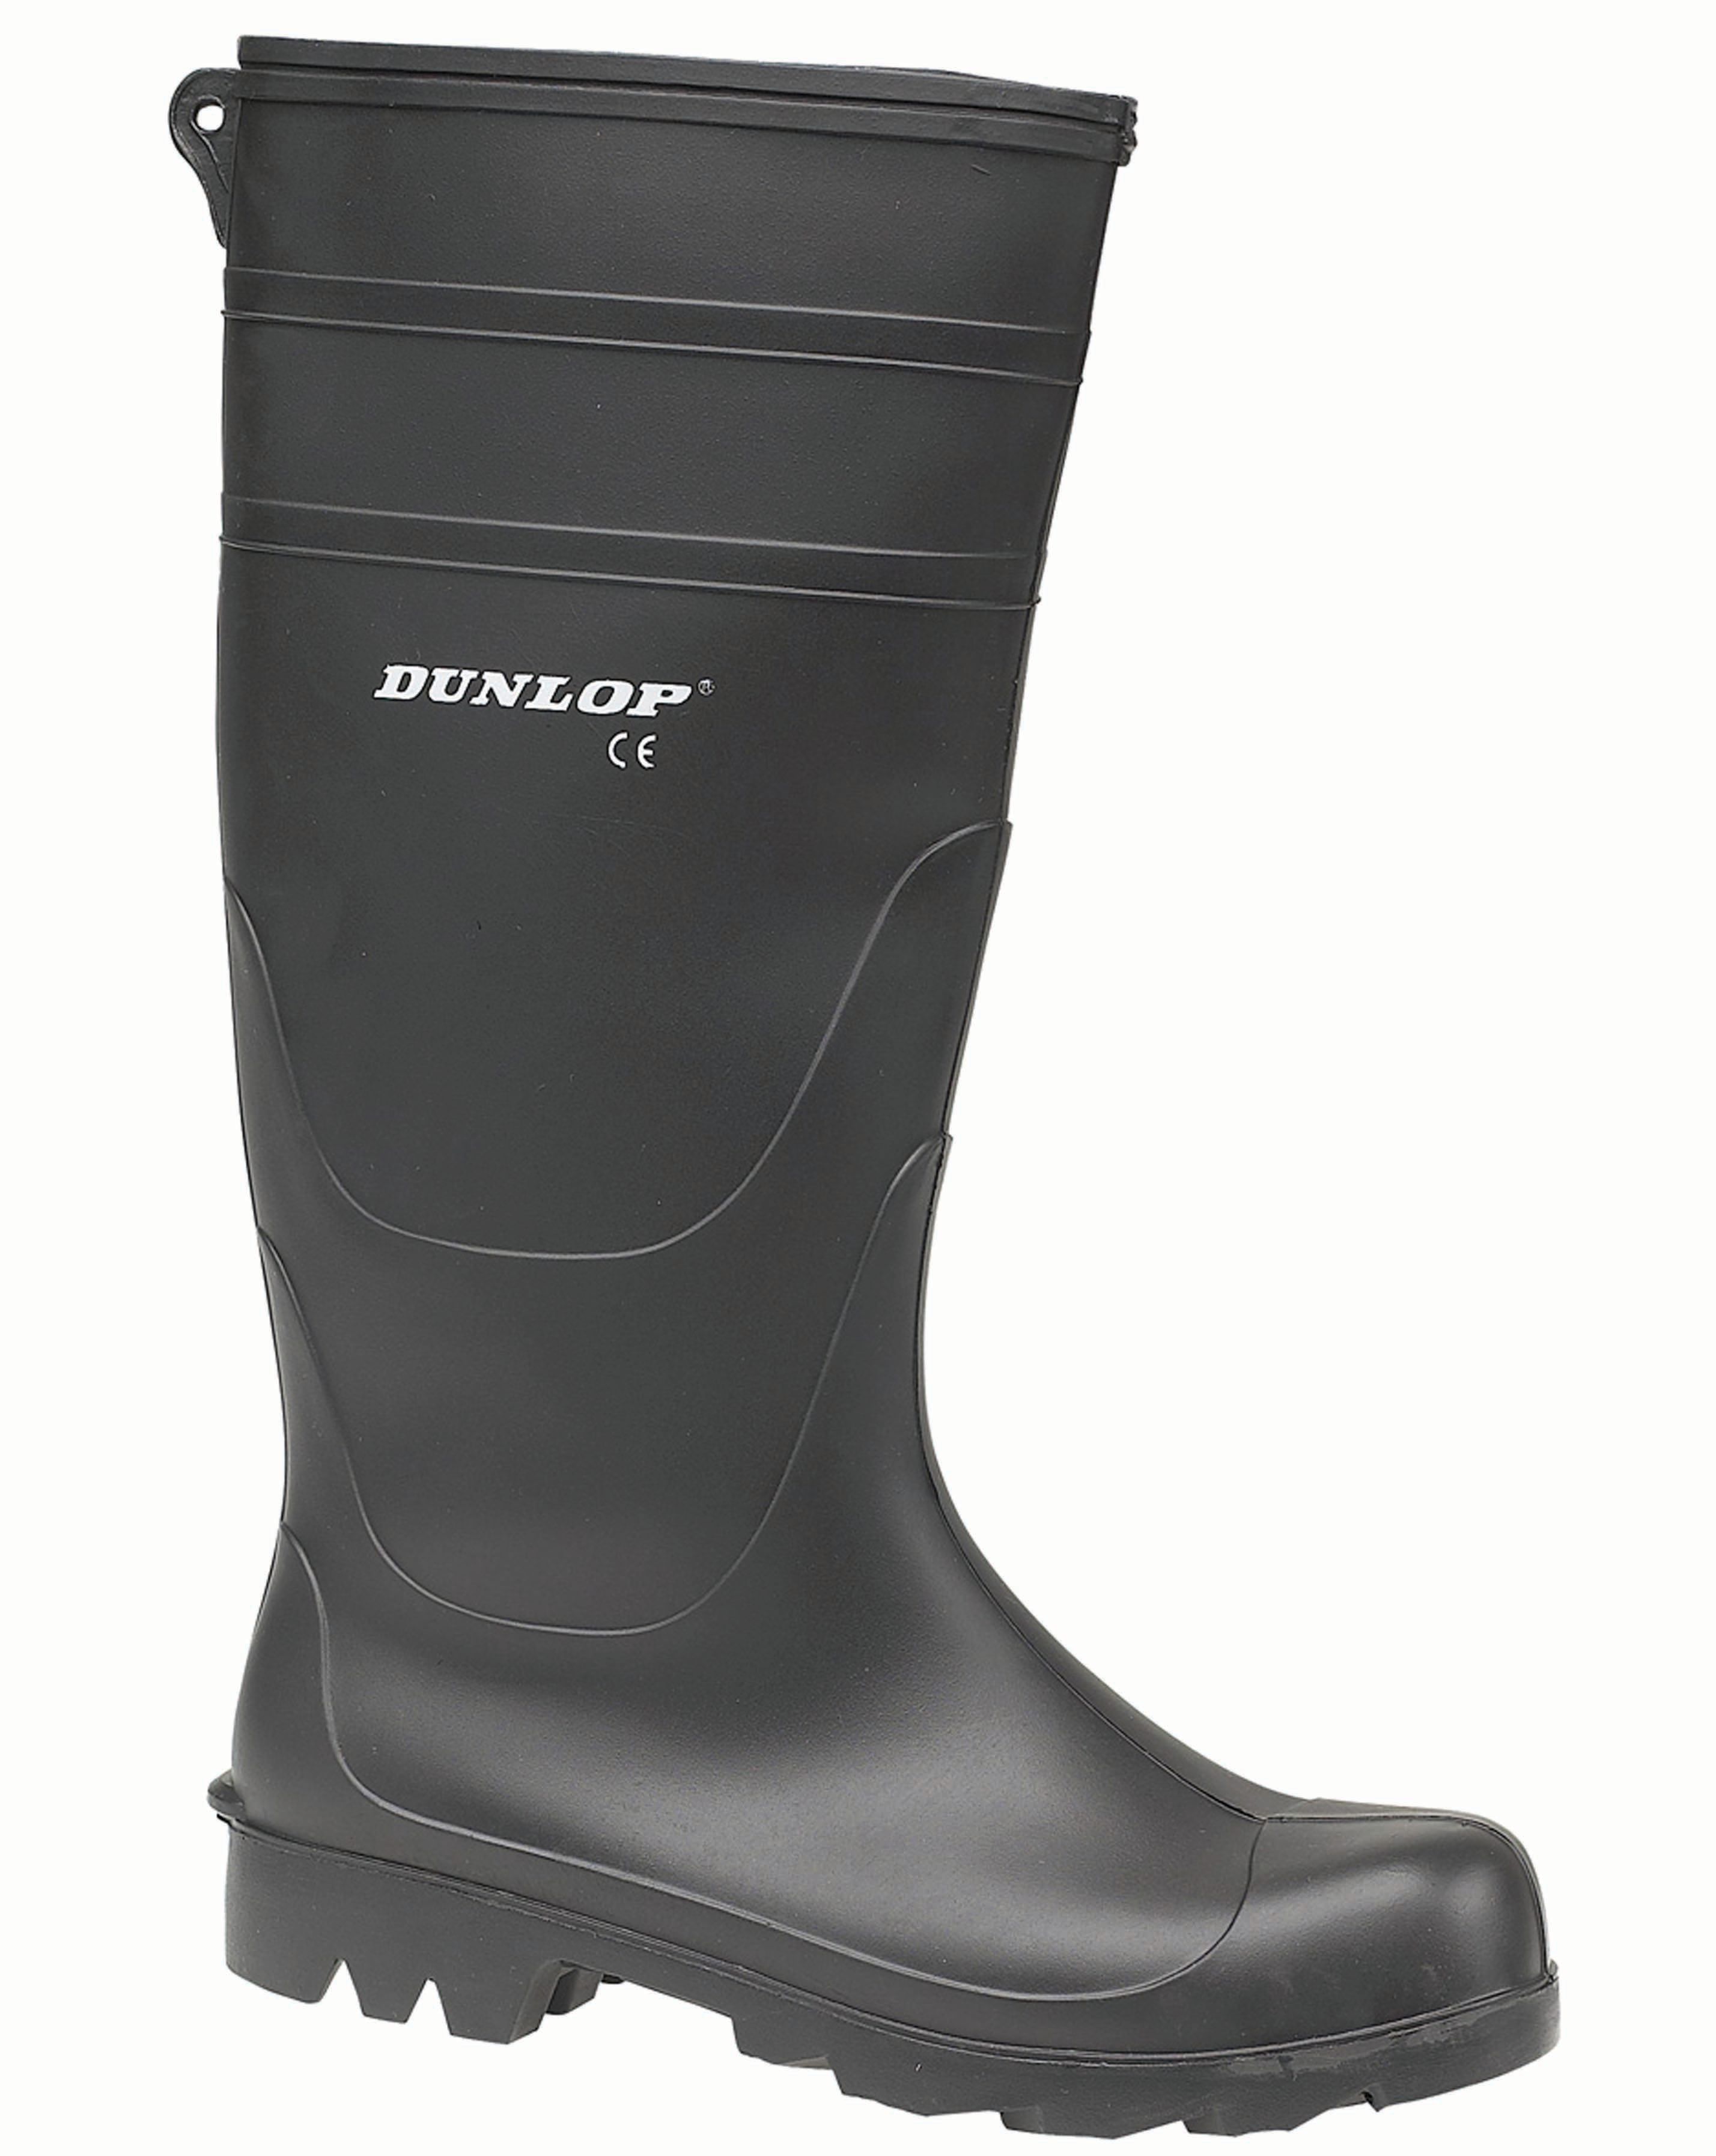 Image of Dunlop Universal PVC Wellington Boot - Black Size 11